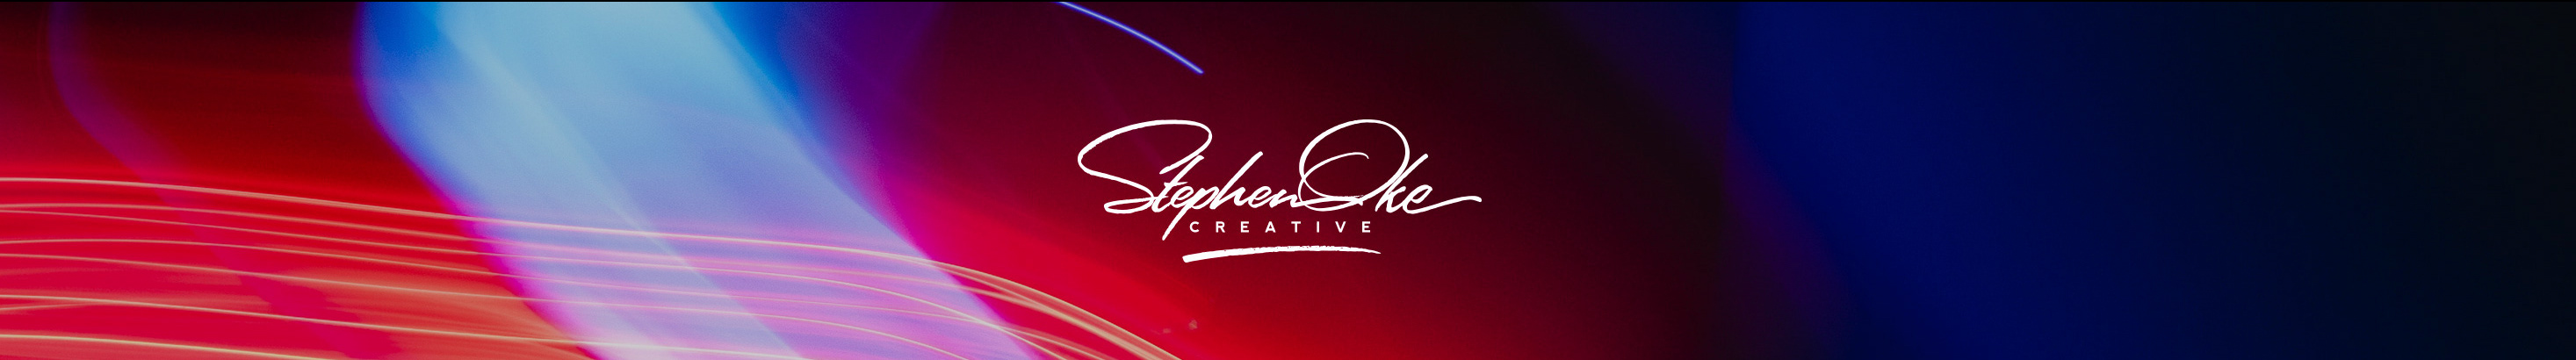 Stephen Oke's profile banner